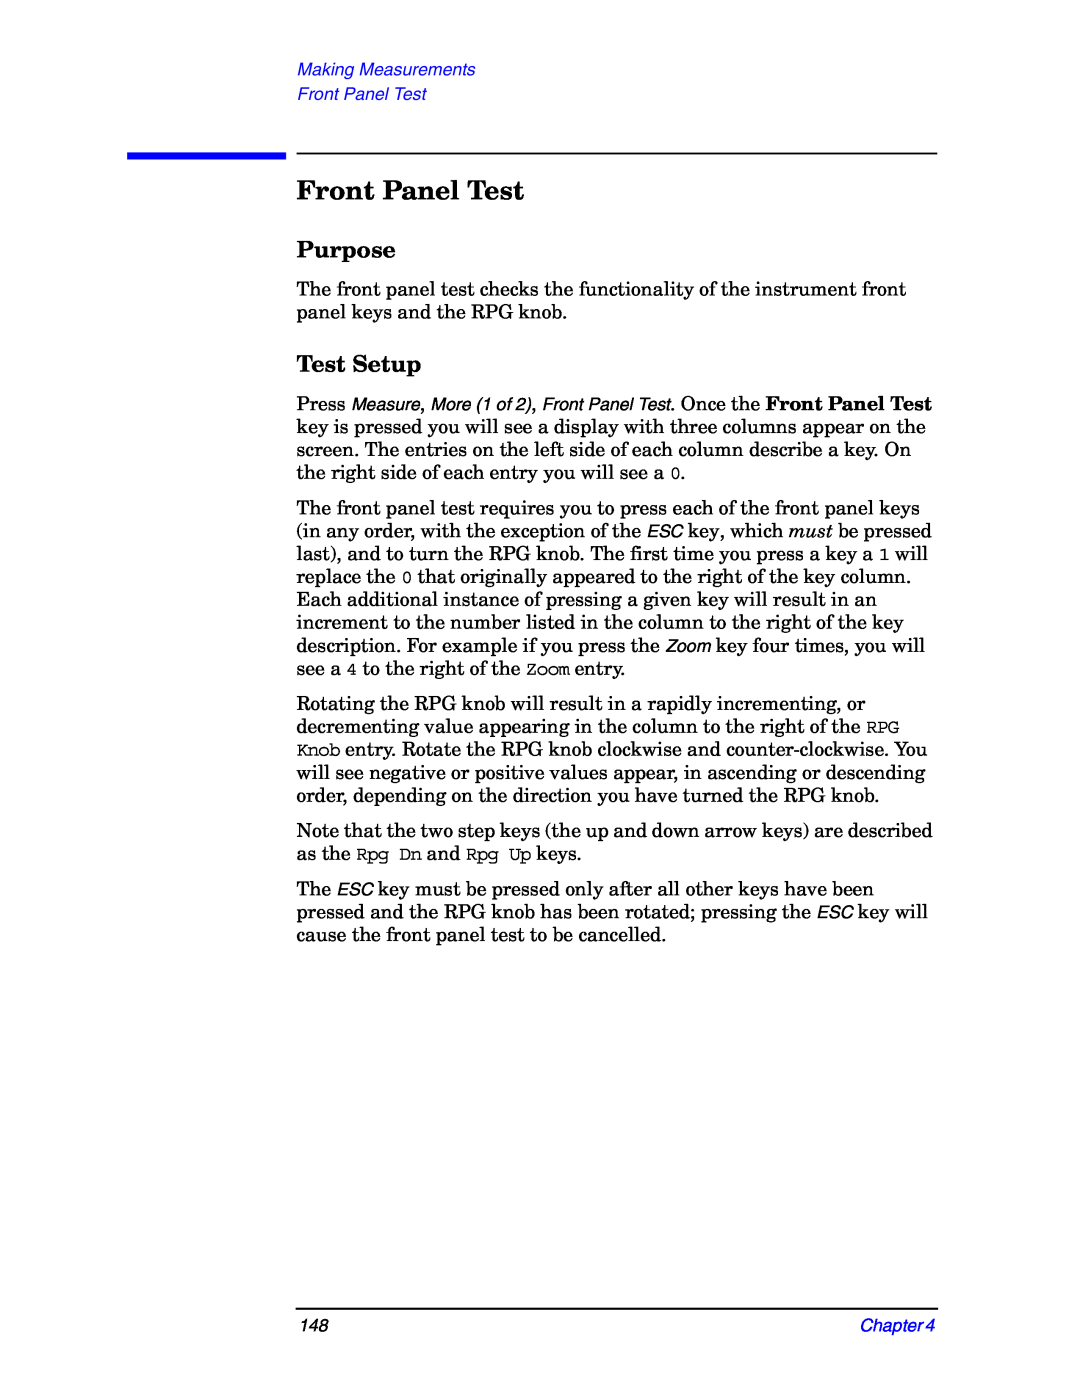 Agilent Technologies E4406A manual Front Panel Test, Purpose, Test Setup 